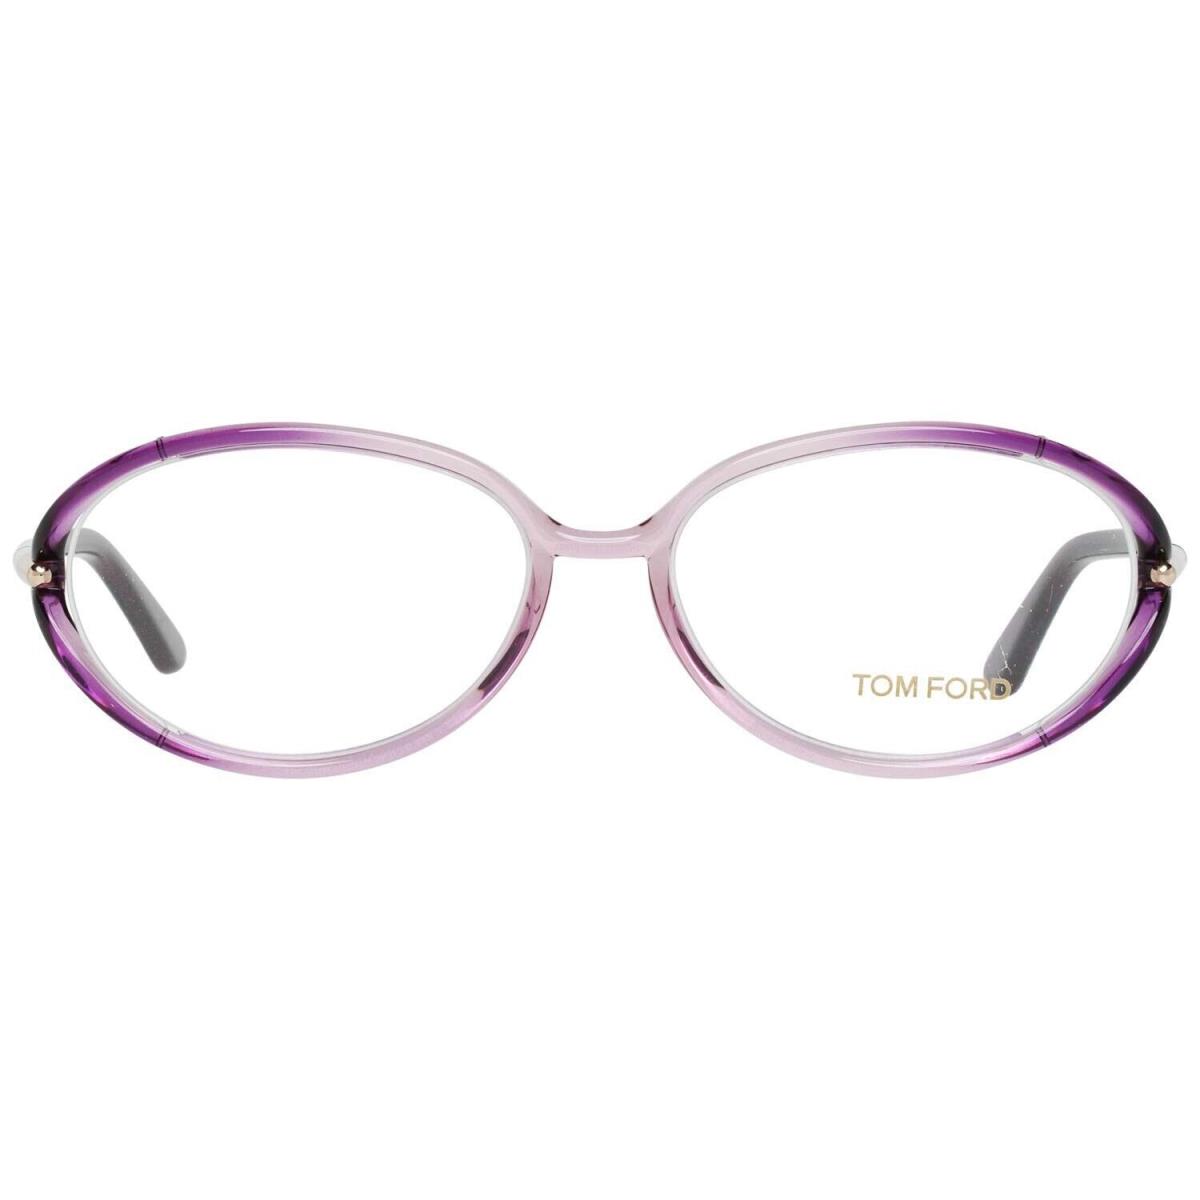 Tom Ford Designer Optical Eyeglasses Demo Lens Purple Oval Tubular Frame FT5212 - Frame: Purple, Lens: